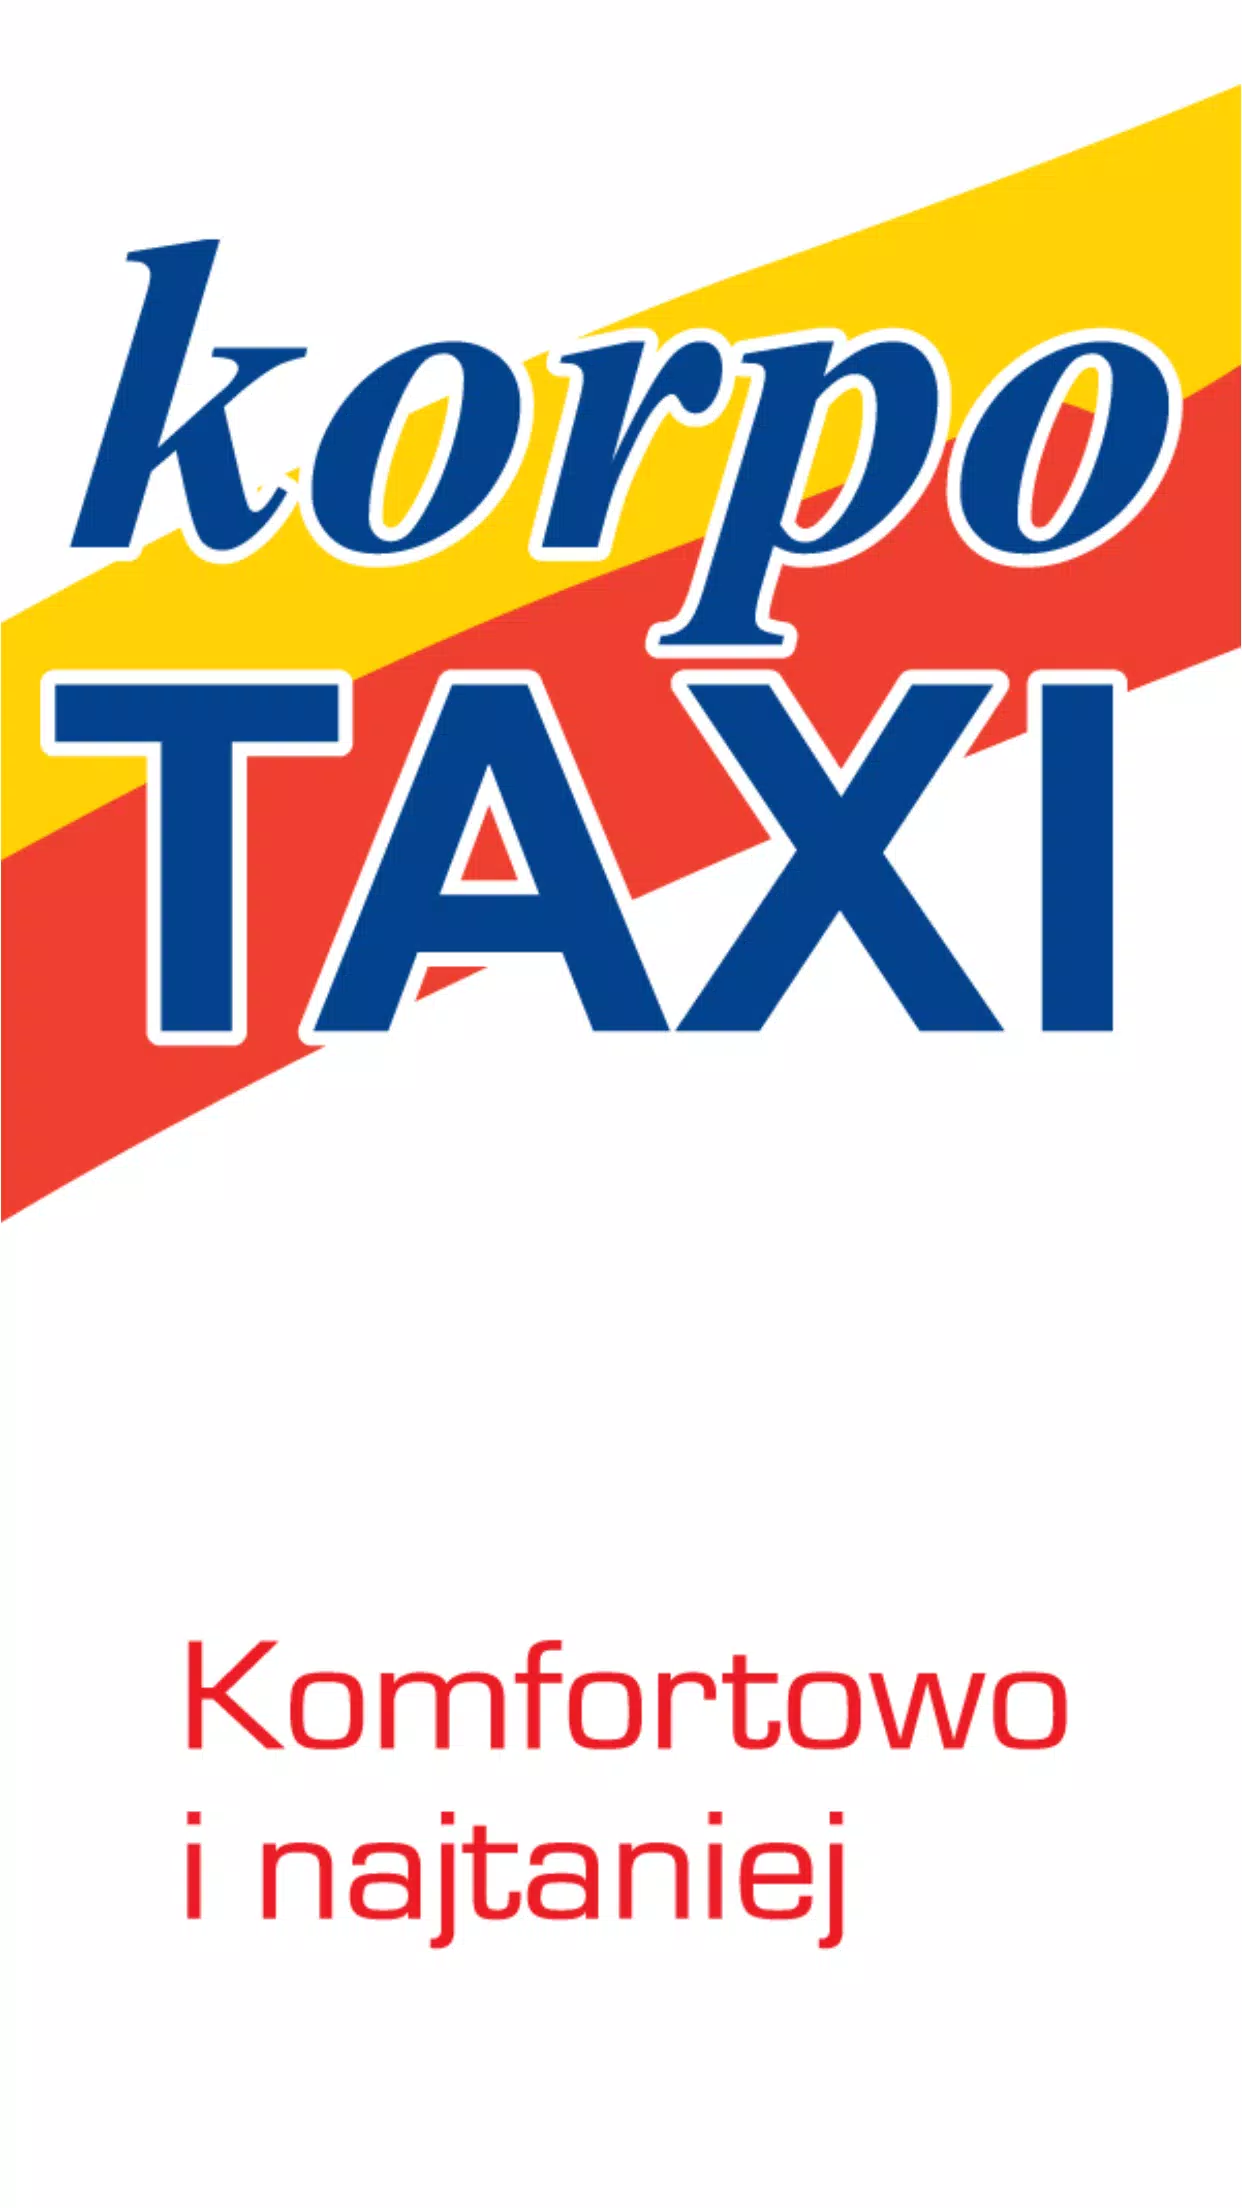 KORPO TAXI Warszawa 22 196 24 APK for Android Download